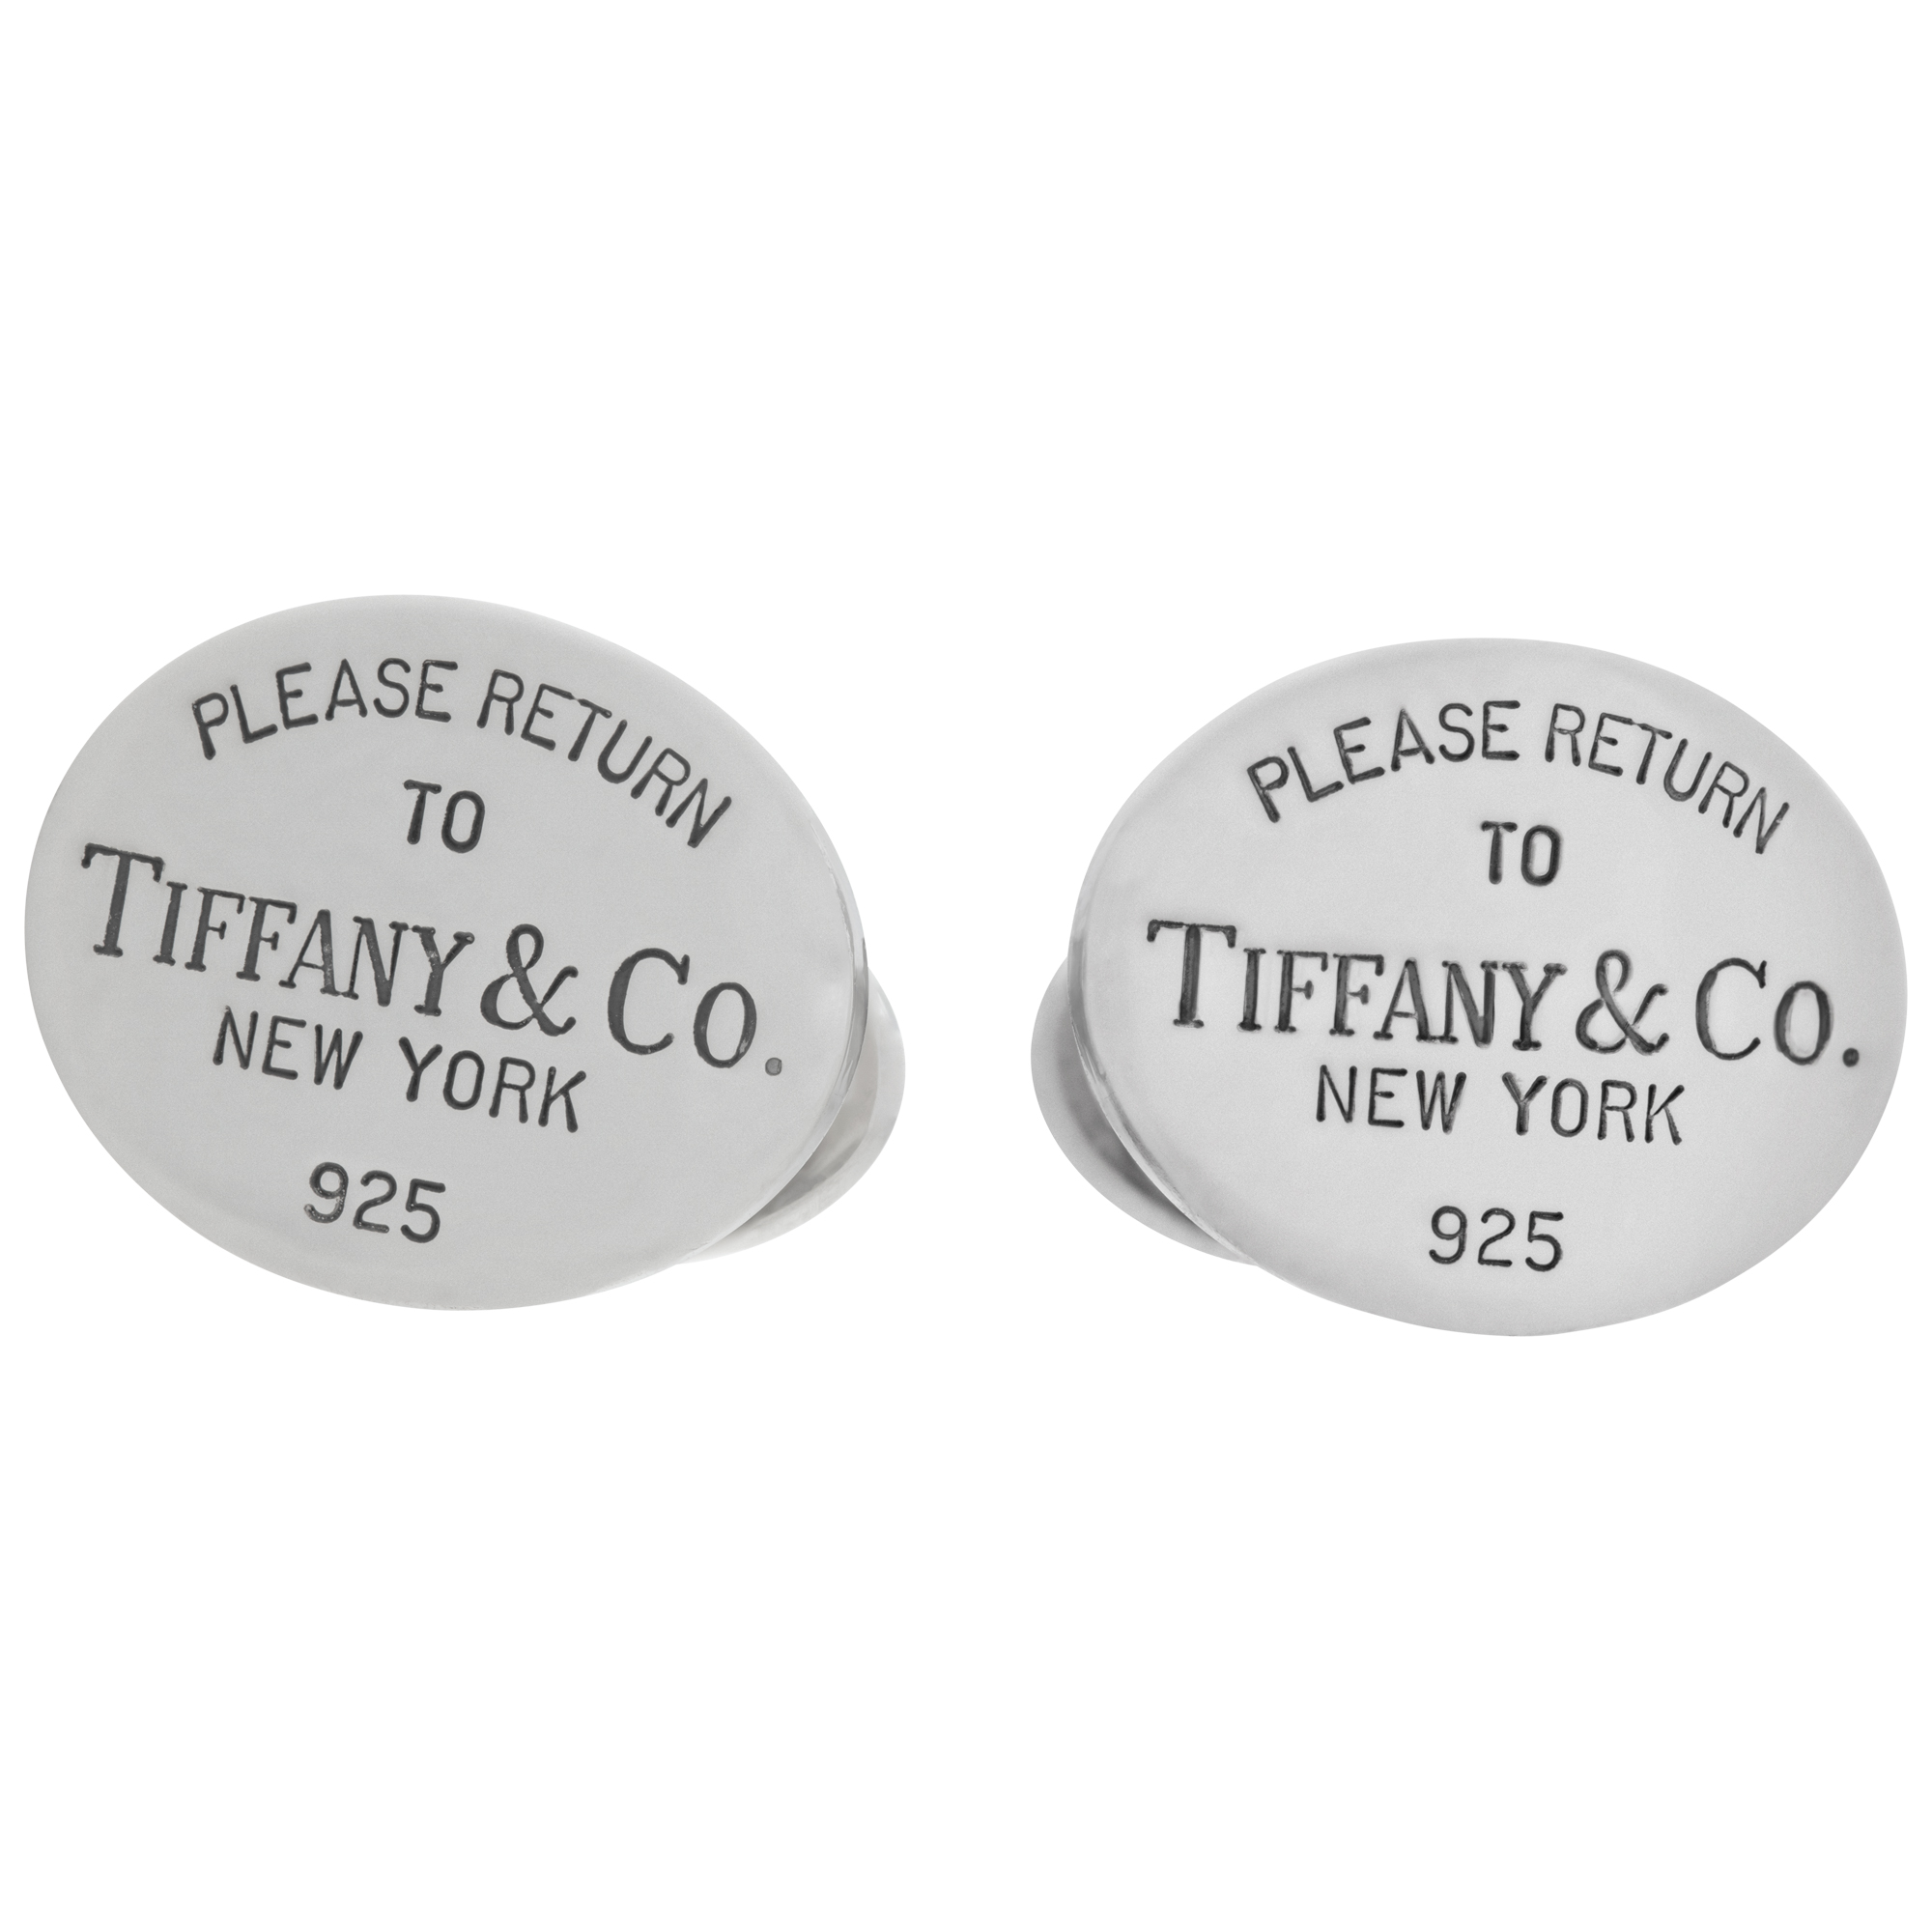 Tiffany & Co. cufflinks in sterling silver image 1